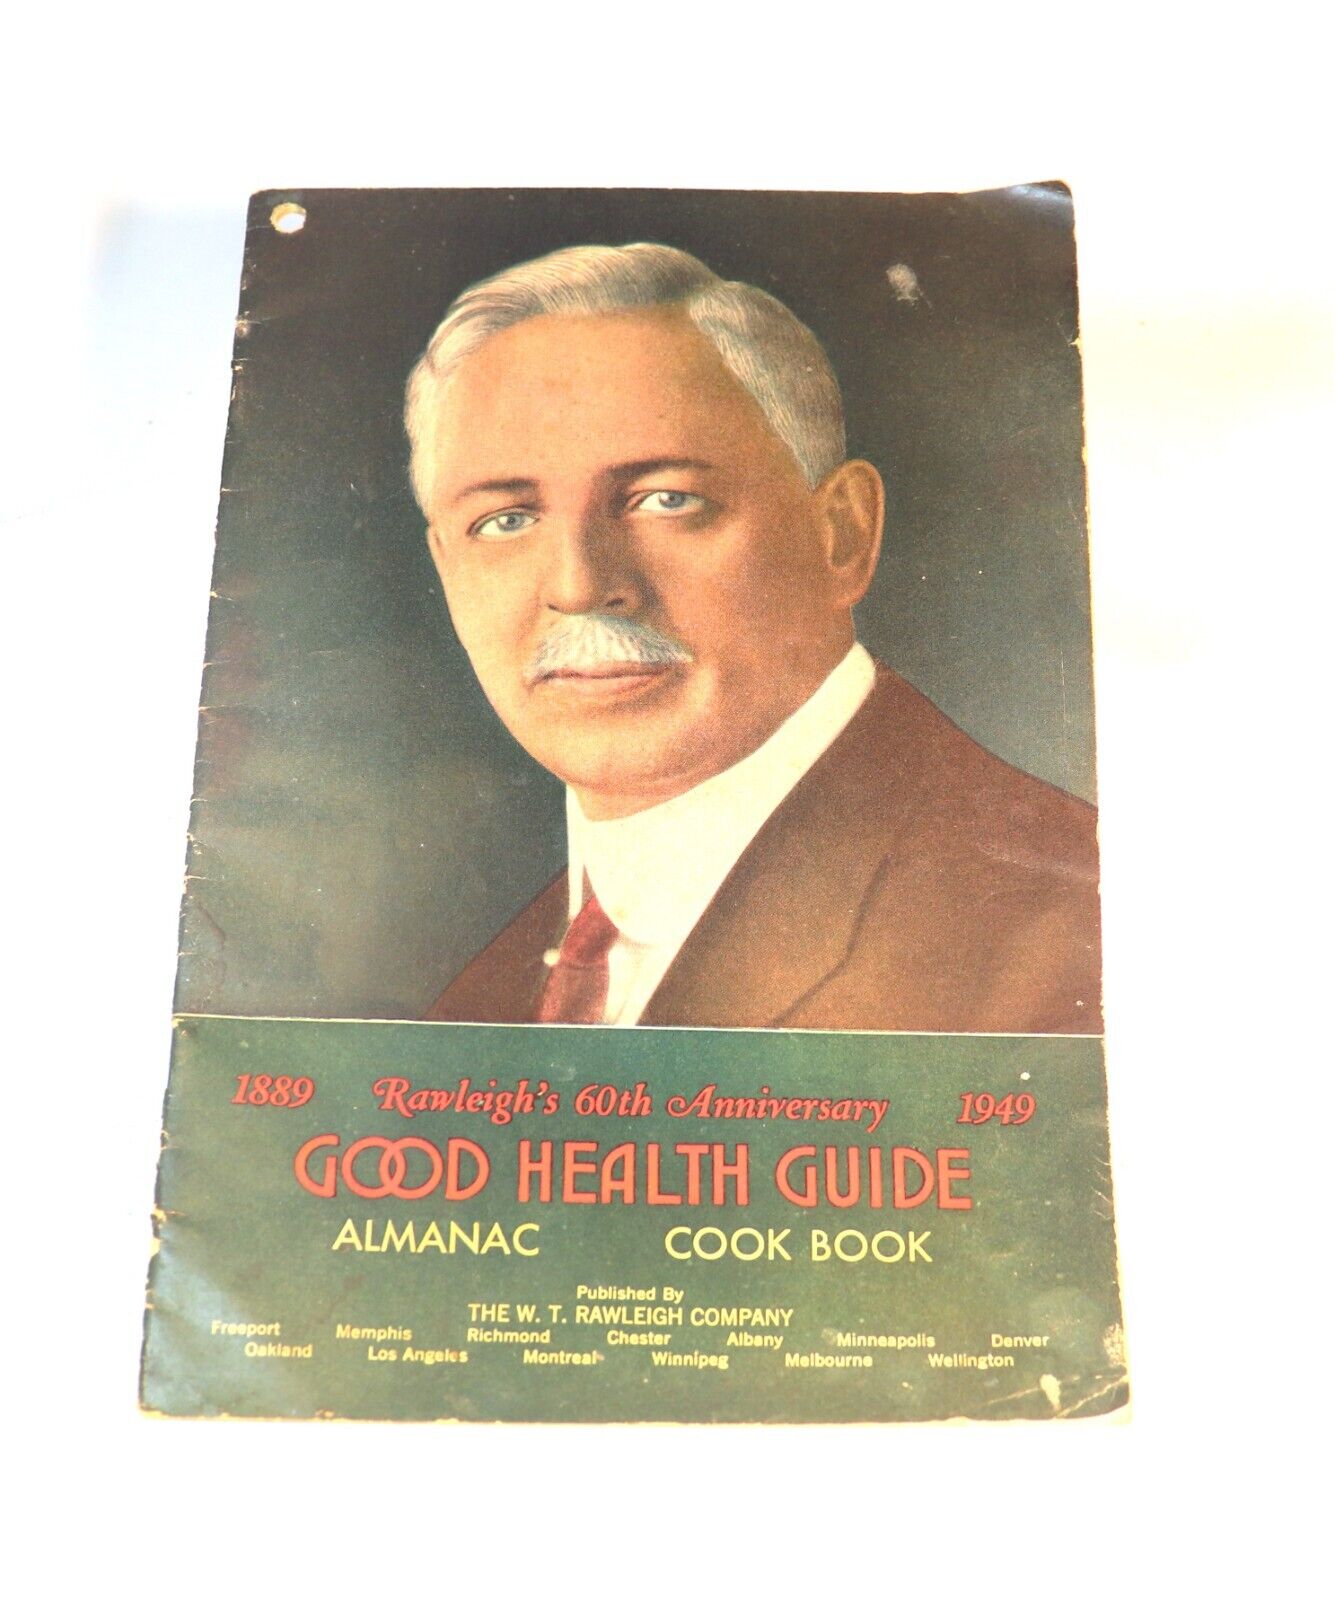 Vintage 1949 Rawleigh\'s Good Health Guide Almanac Cookbook Arm & Hammer Almanac